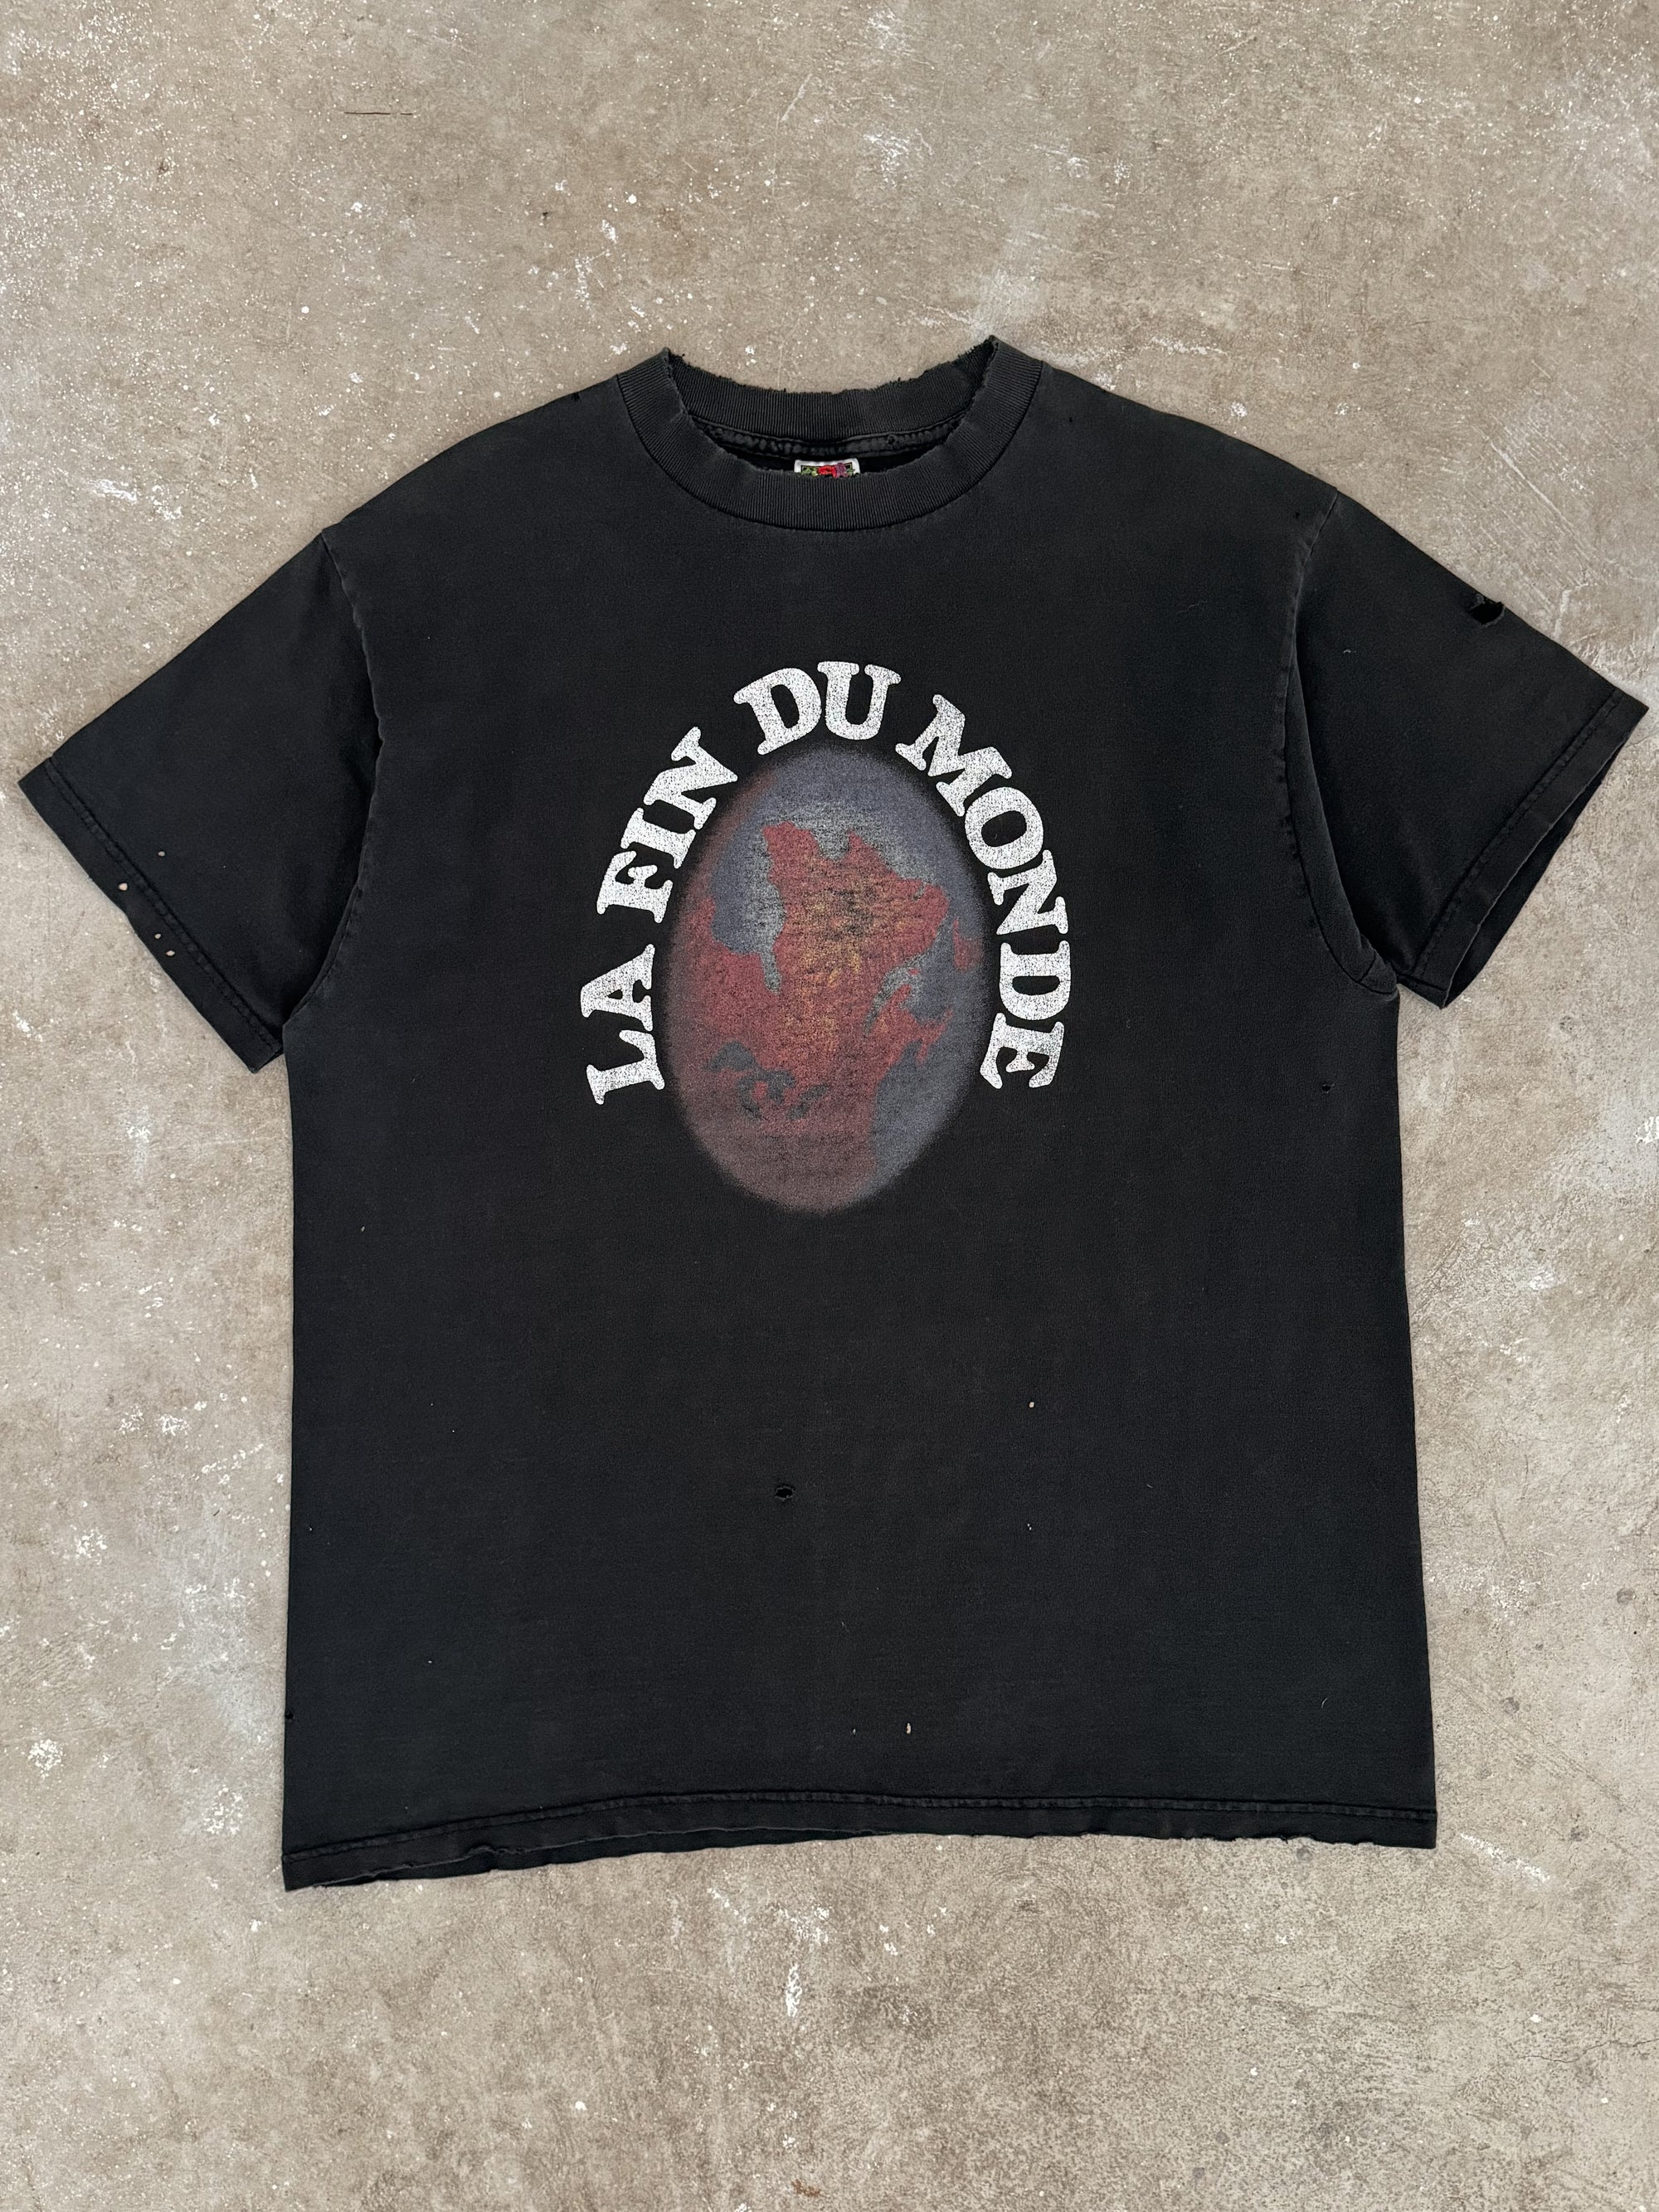 1990s "La Fin Du Monde" Distressed Tee (XL)